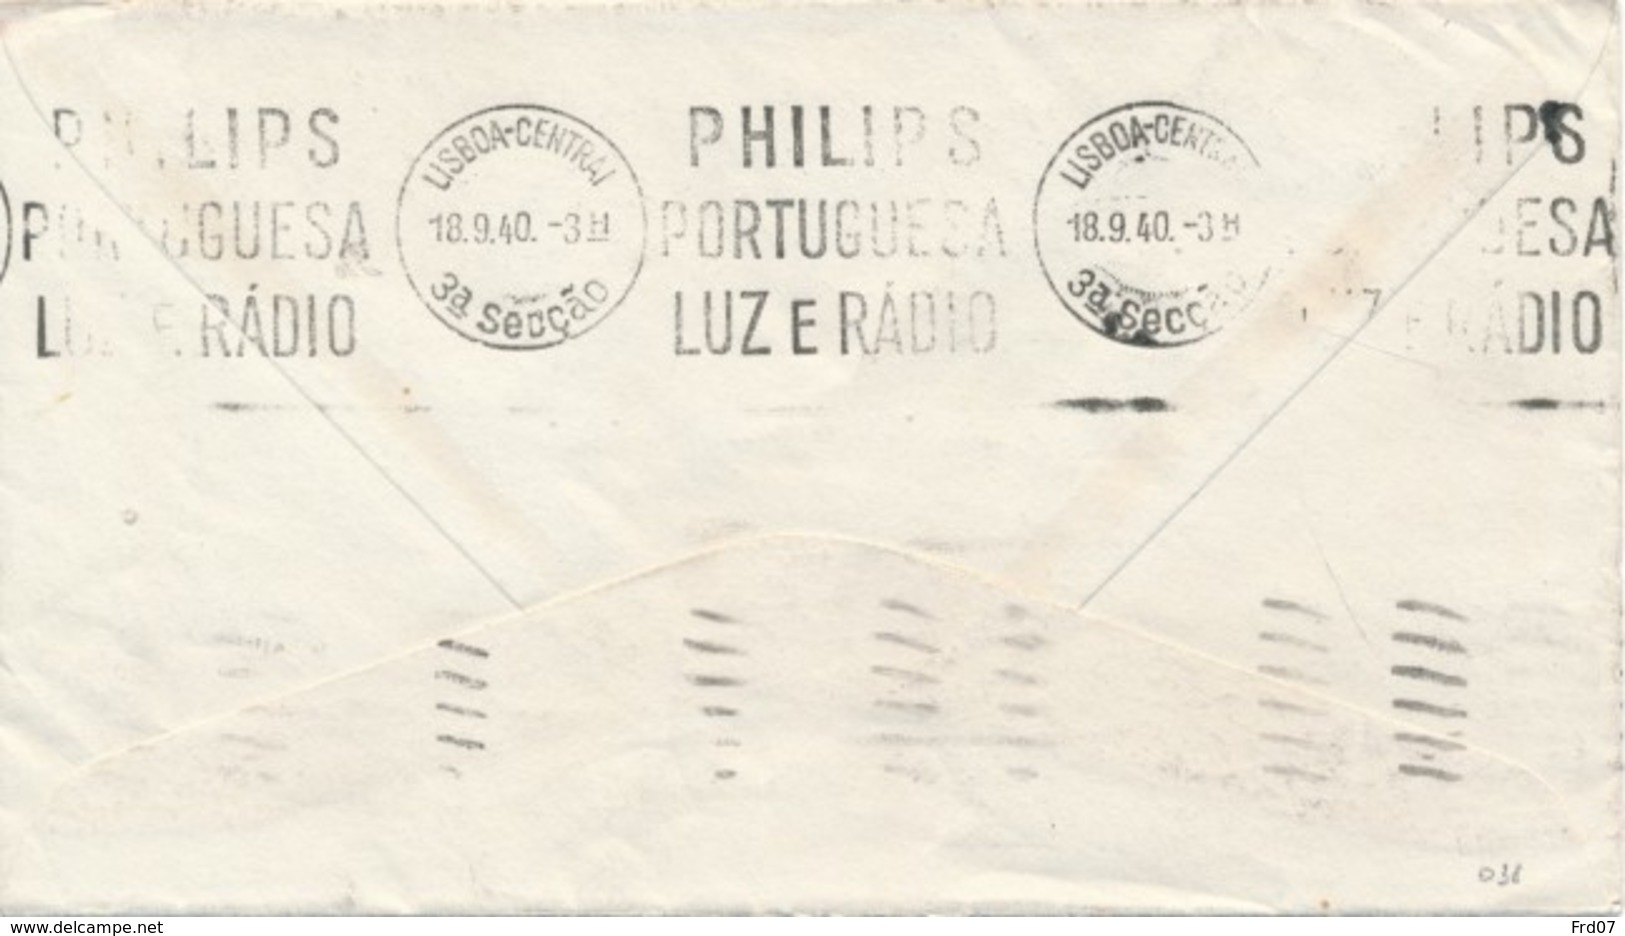 Par Avion - By Air Mail - USA Springfield Tenn. Sep 7 1940 Vers La Suisse Via Lissabon 18.9.40 / Philips Radio - 2c. 1941-1960 Lettres